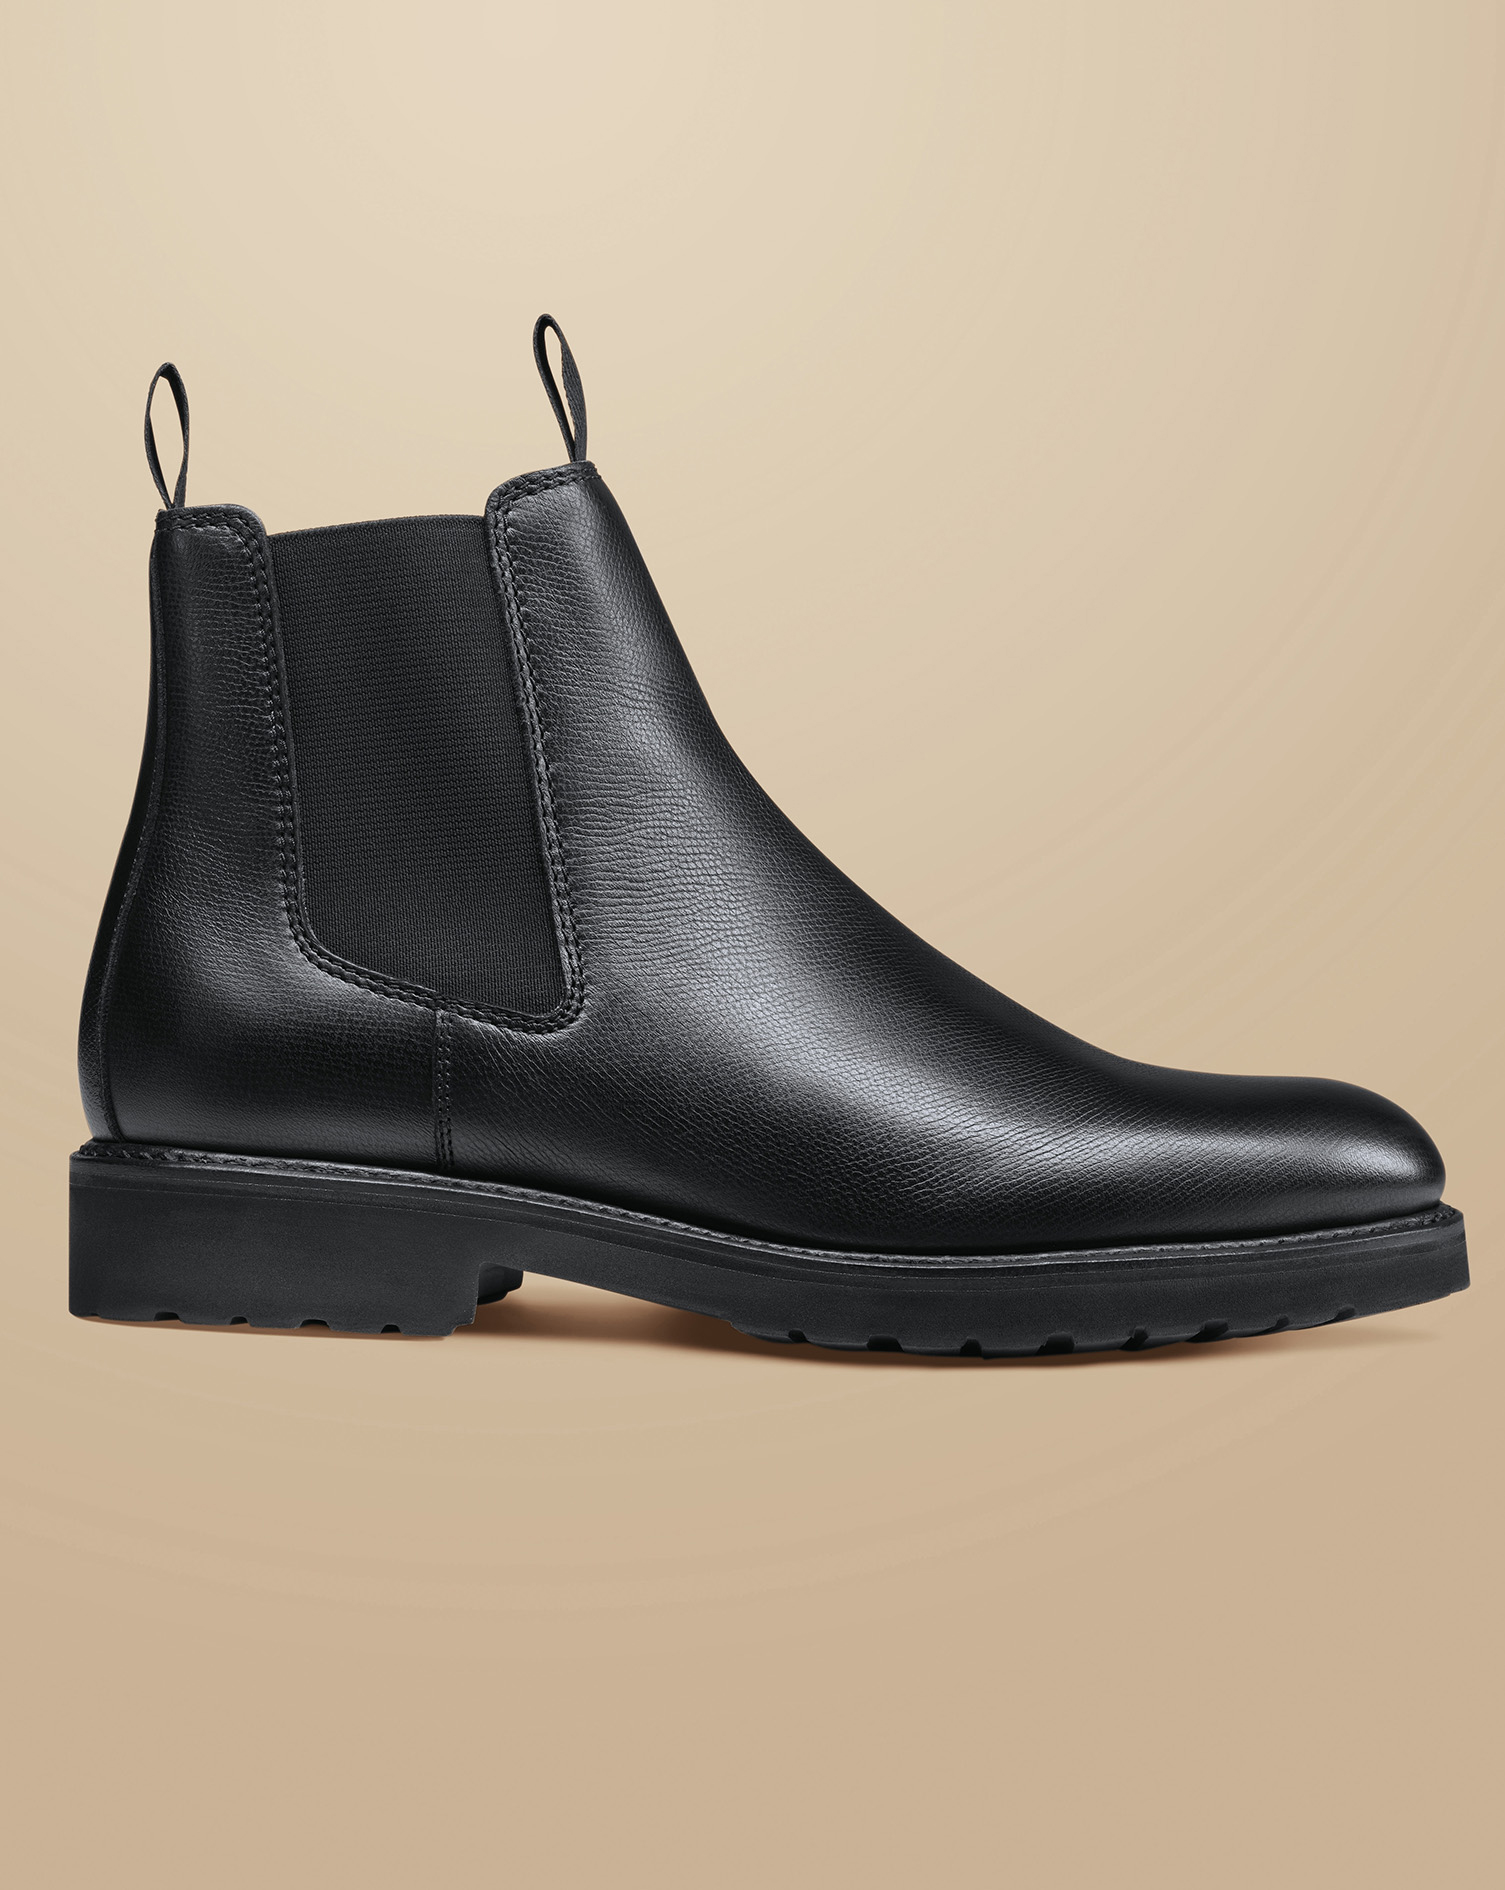 Men's Charles Tyrwhitt Rubber Sole Grain Leather Chelsea Boots - Black Size 10
